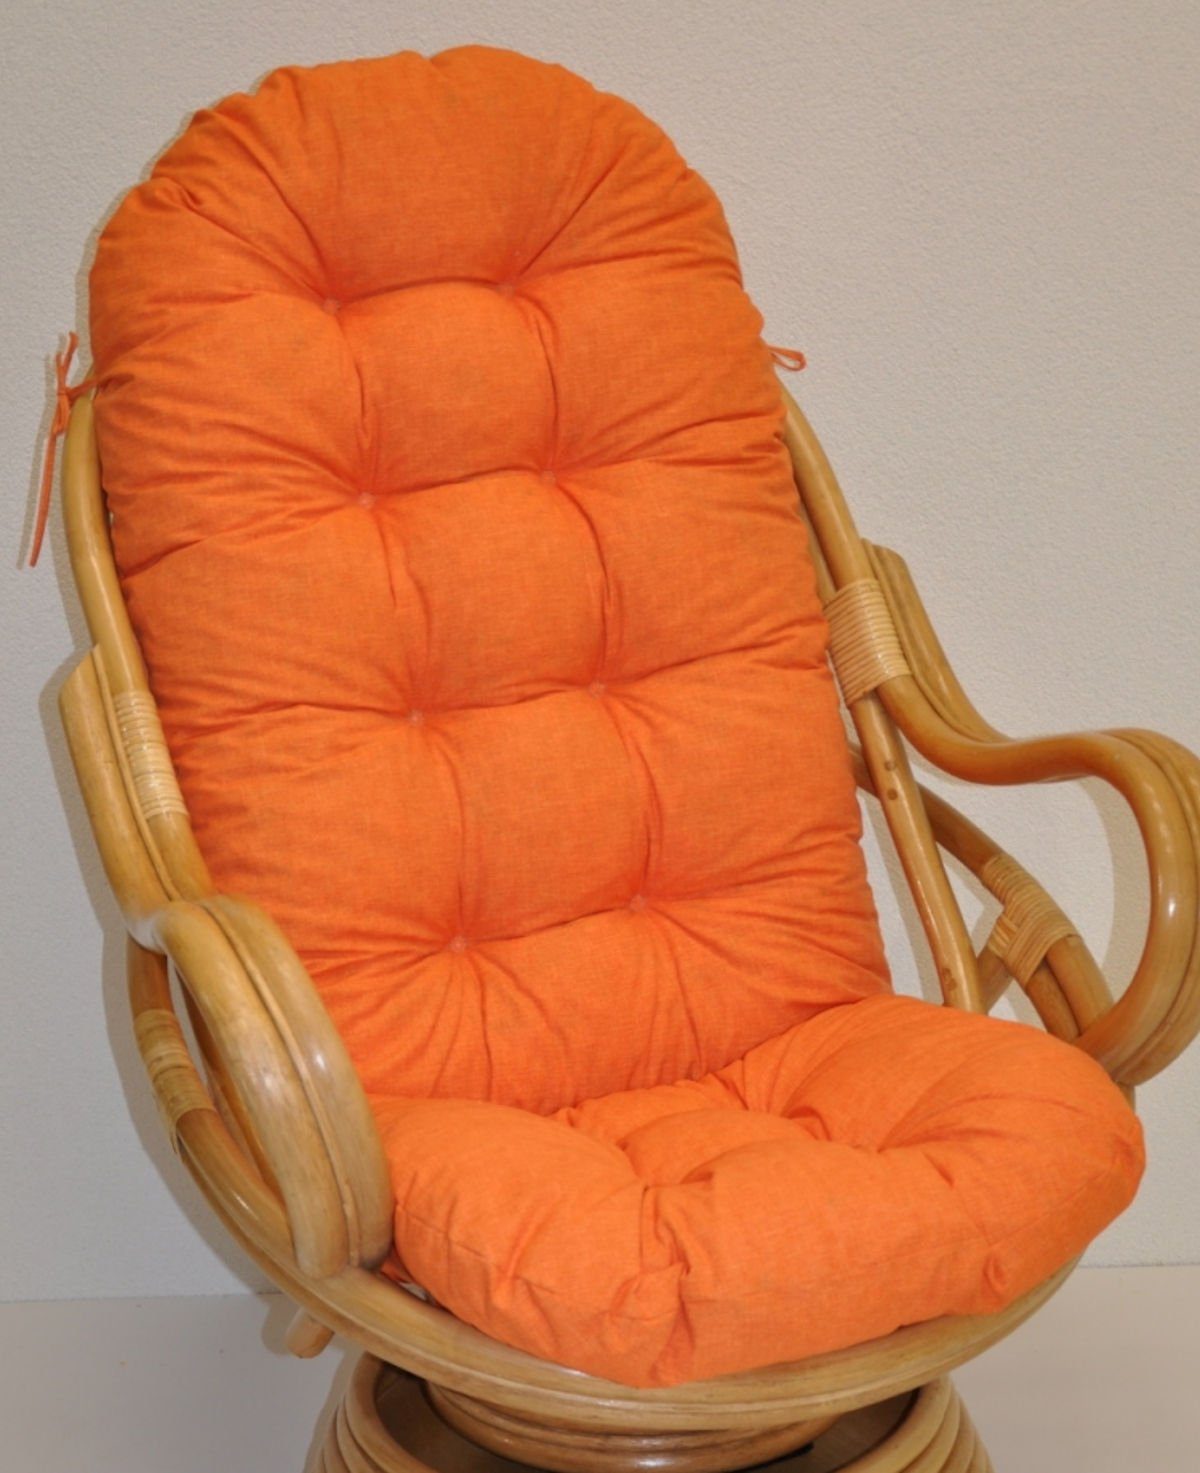 Rattani Sesselauflage Polster für Rattan Schaukelstuhl Drehsessel L 135 cm, Color orange